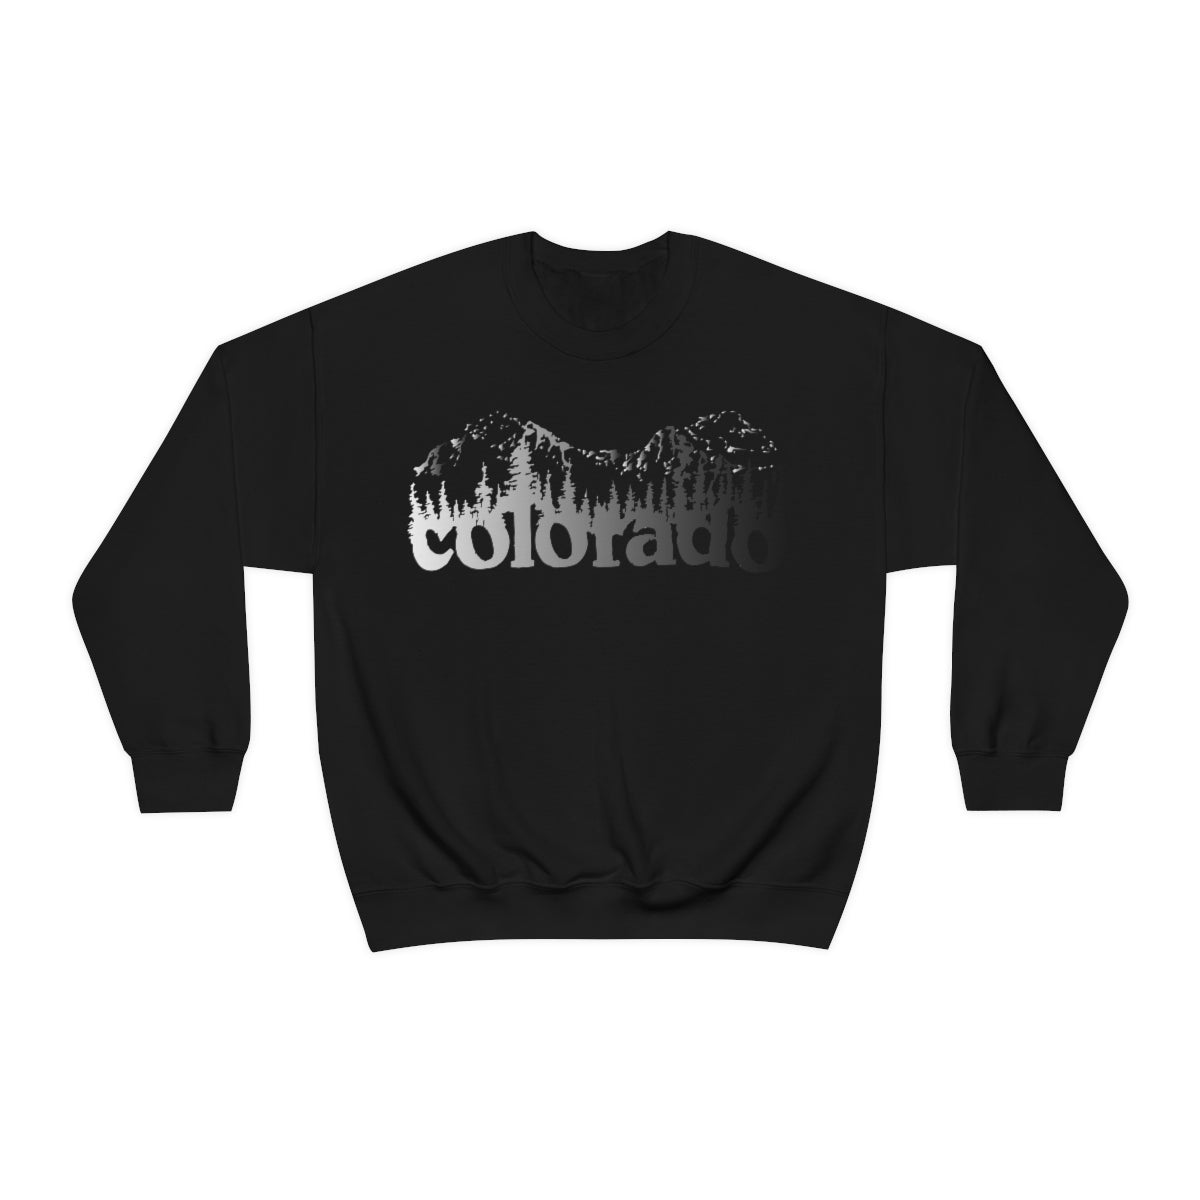 Colorado Sweatshirt, Après Ski Sweatshirt, Girls Weekend Sweatshirt, Ski Sweater, Ski Trip, black Colorado sweatshirt